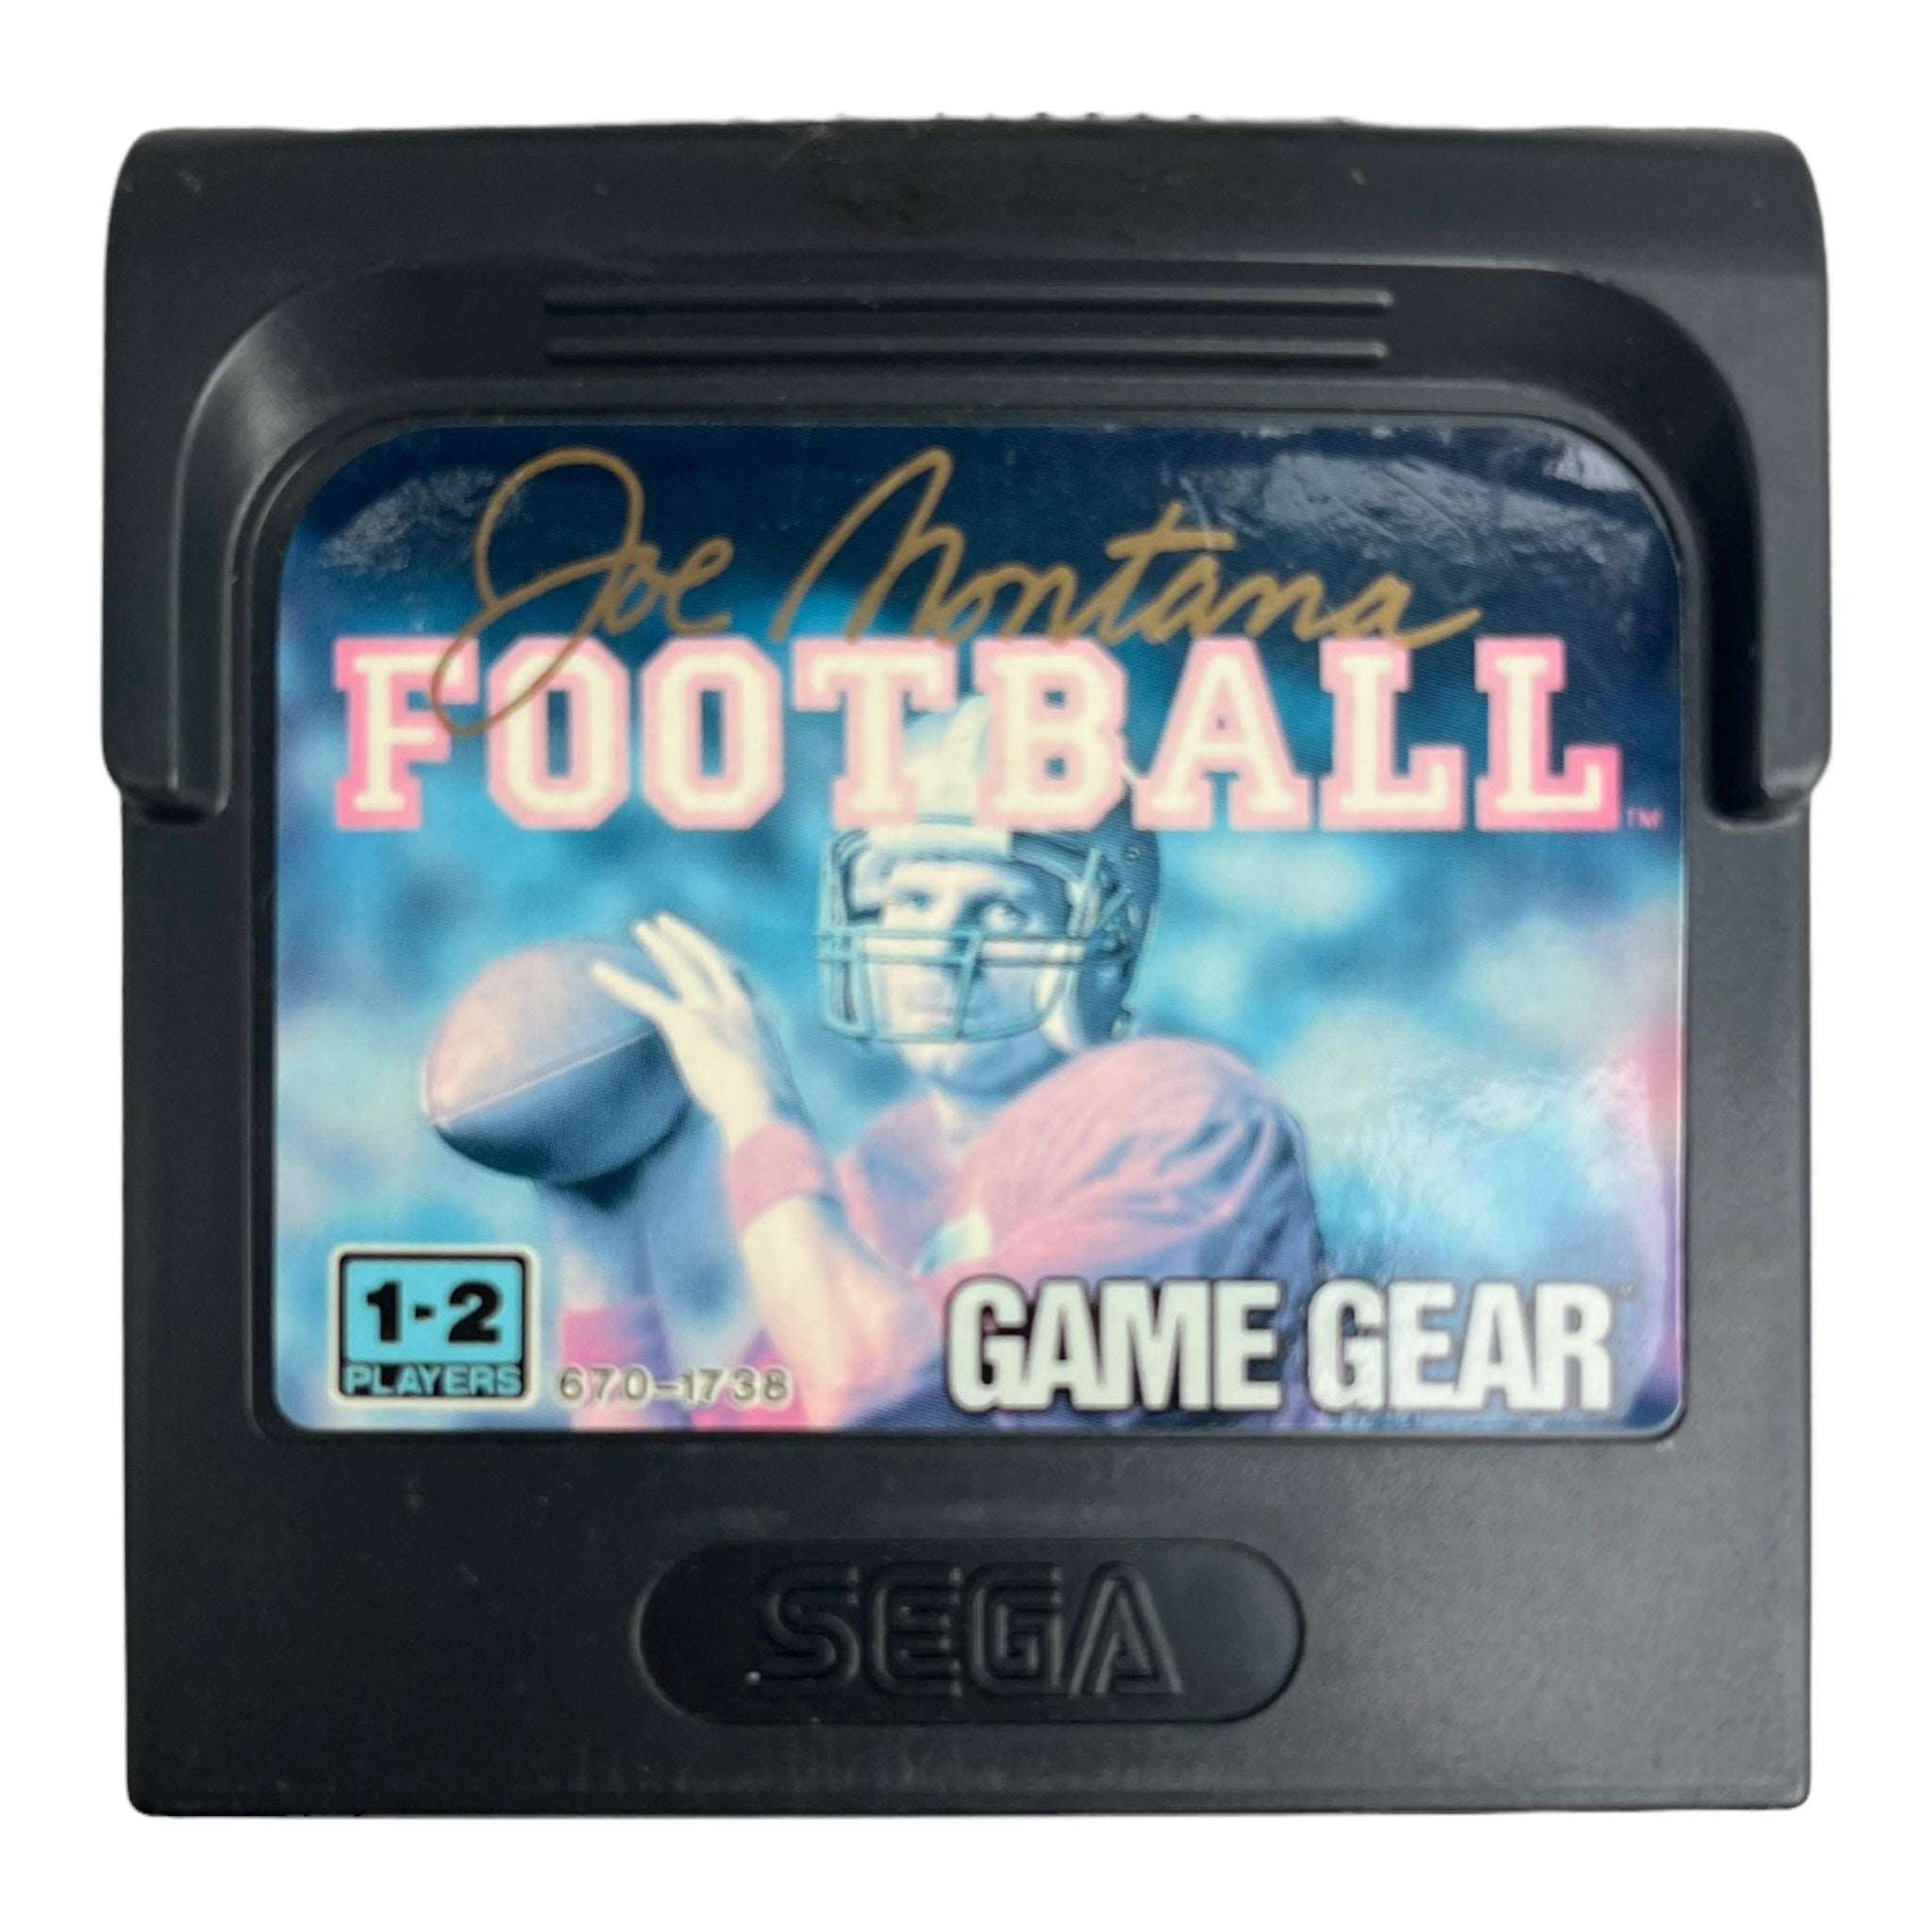 Joe Montana Football - Game Gear (Losse cartridge)